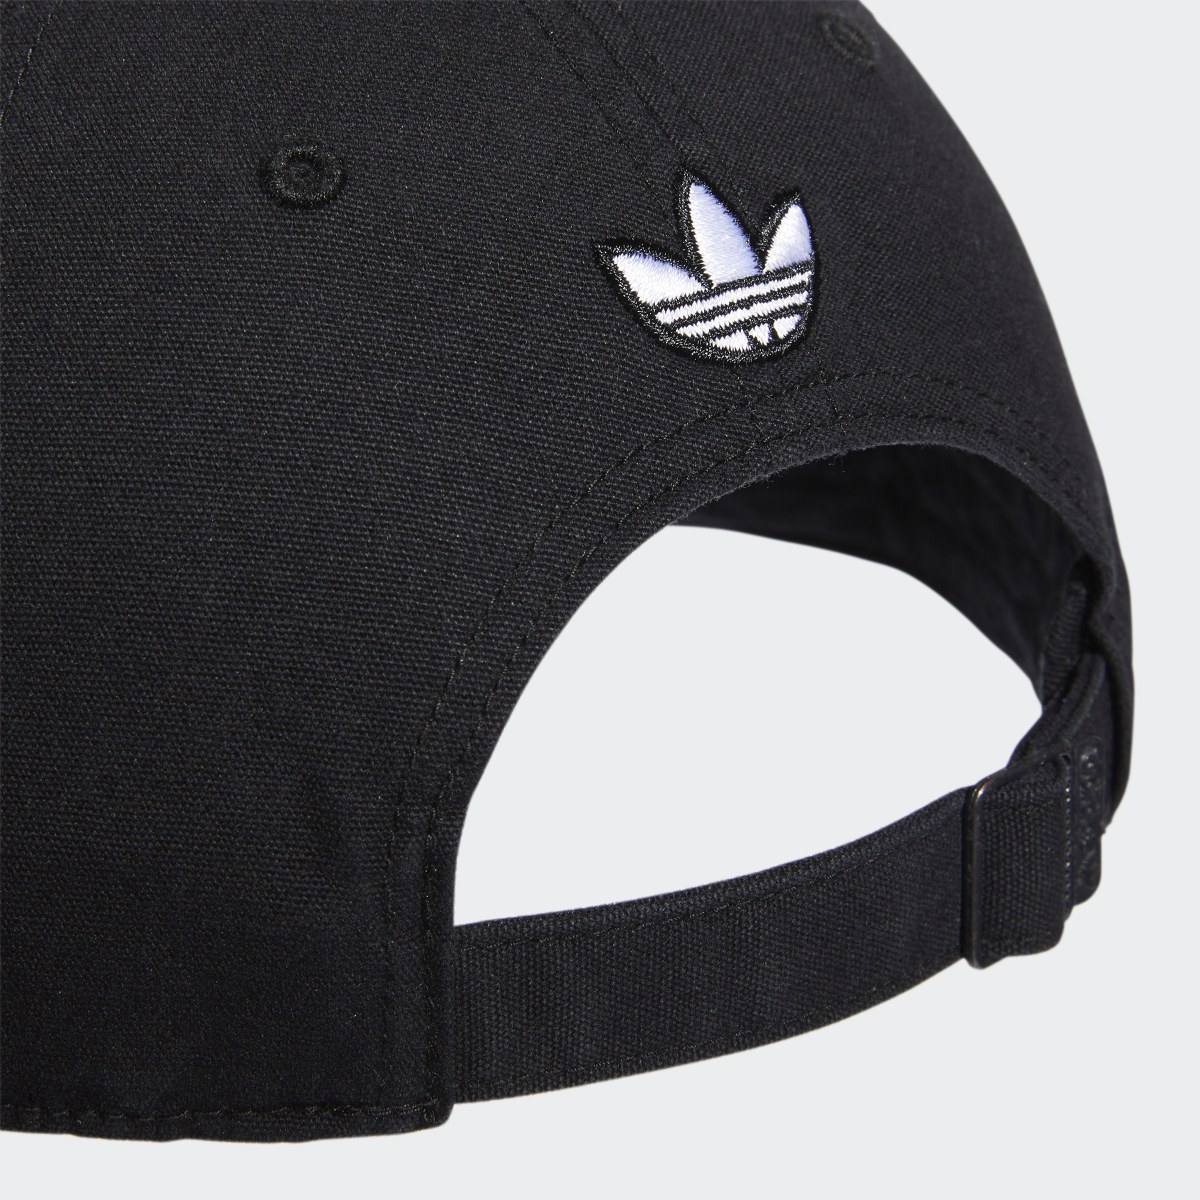 Adidas Script Strap-Back Hat. 7